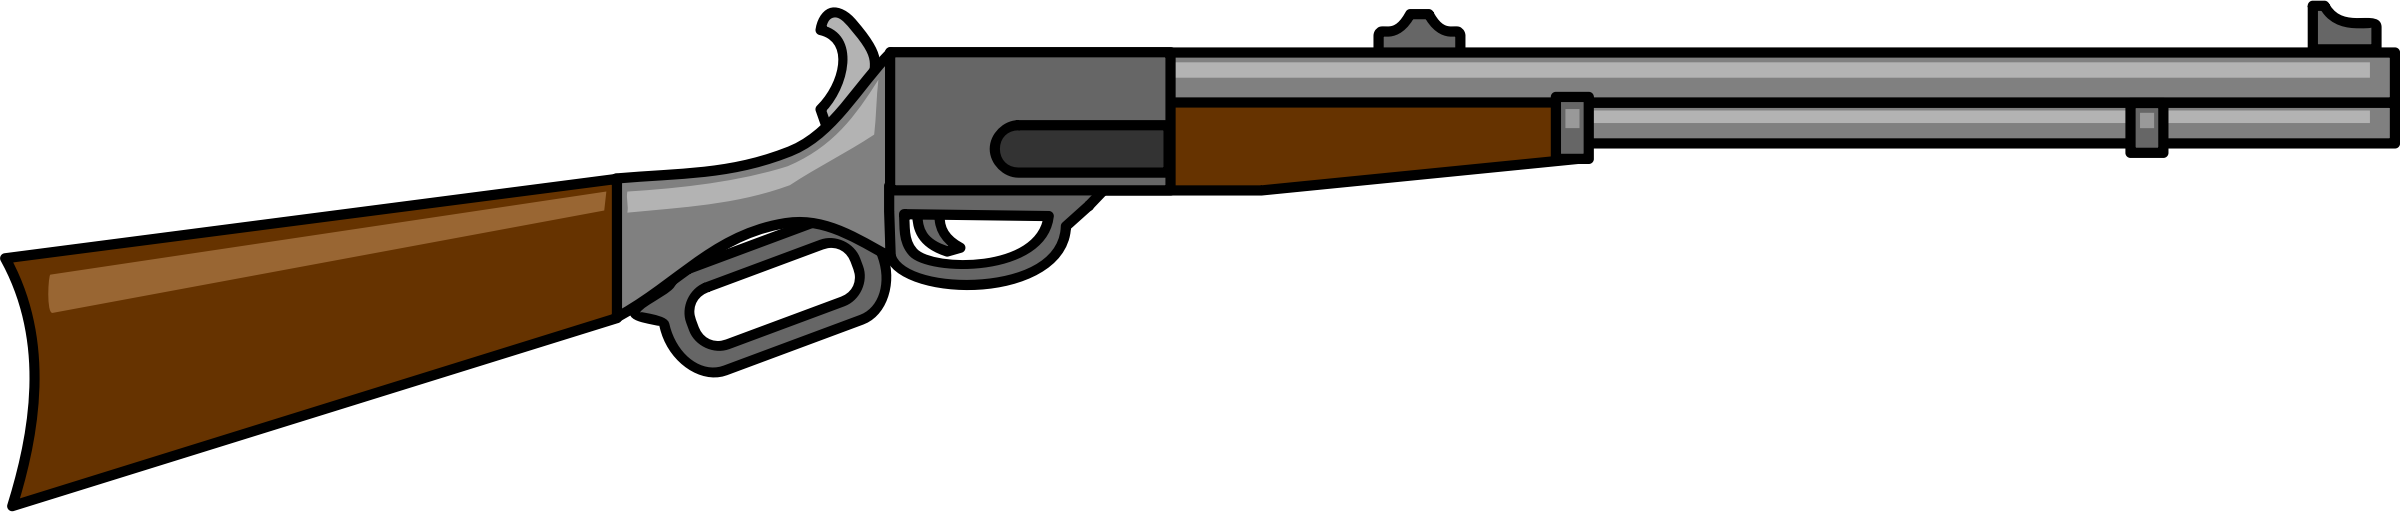 This Free Icons Png Design Of Gun 11 Hdpng.com  - Cartoon Gun, Transparent background PNG HD thumbnail